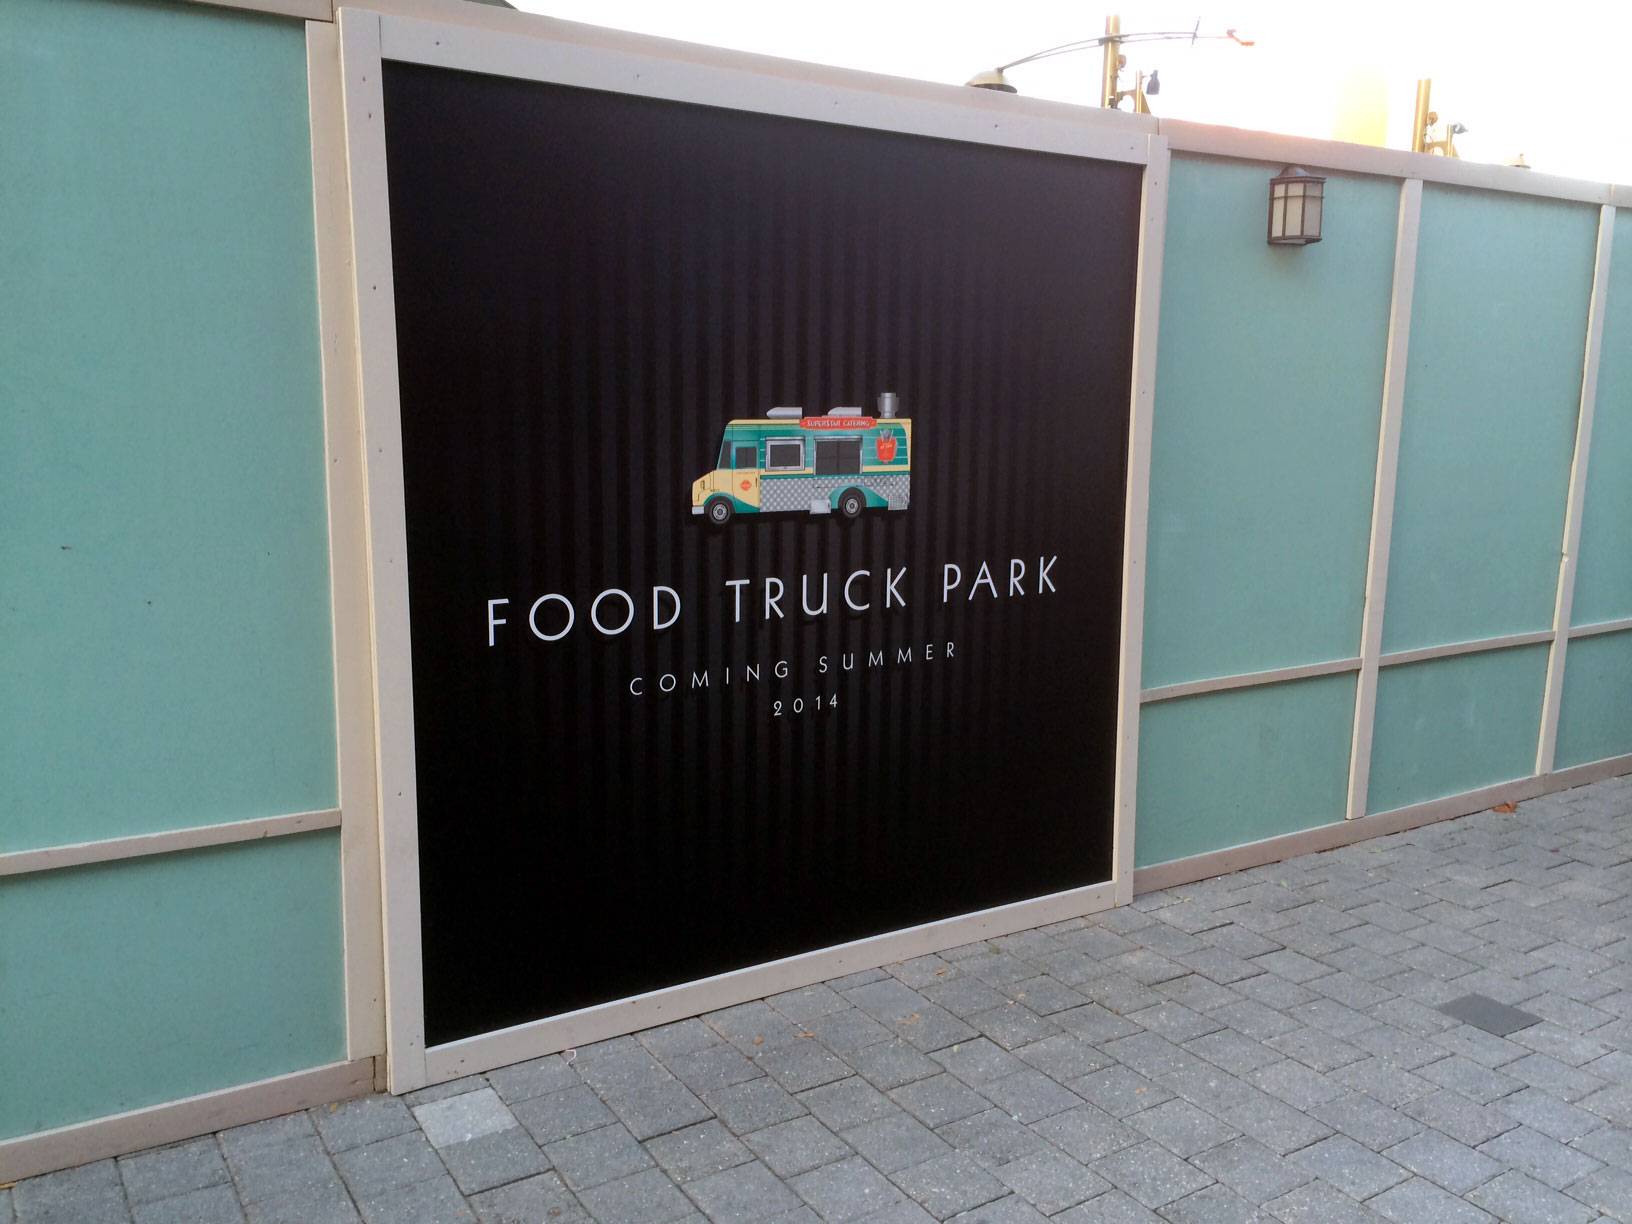 Food Truck Park signage